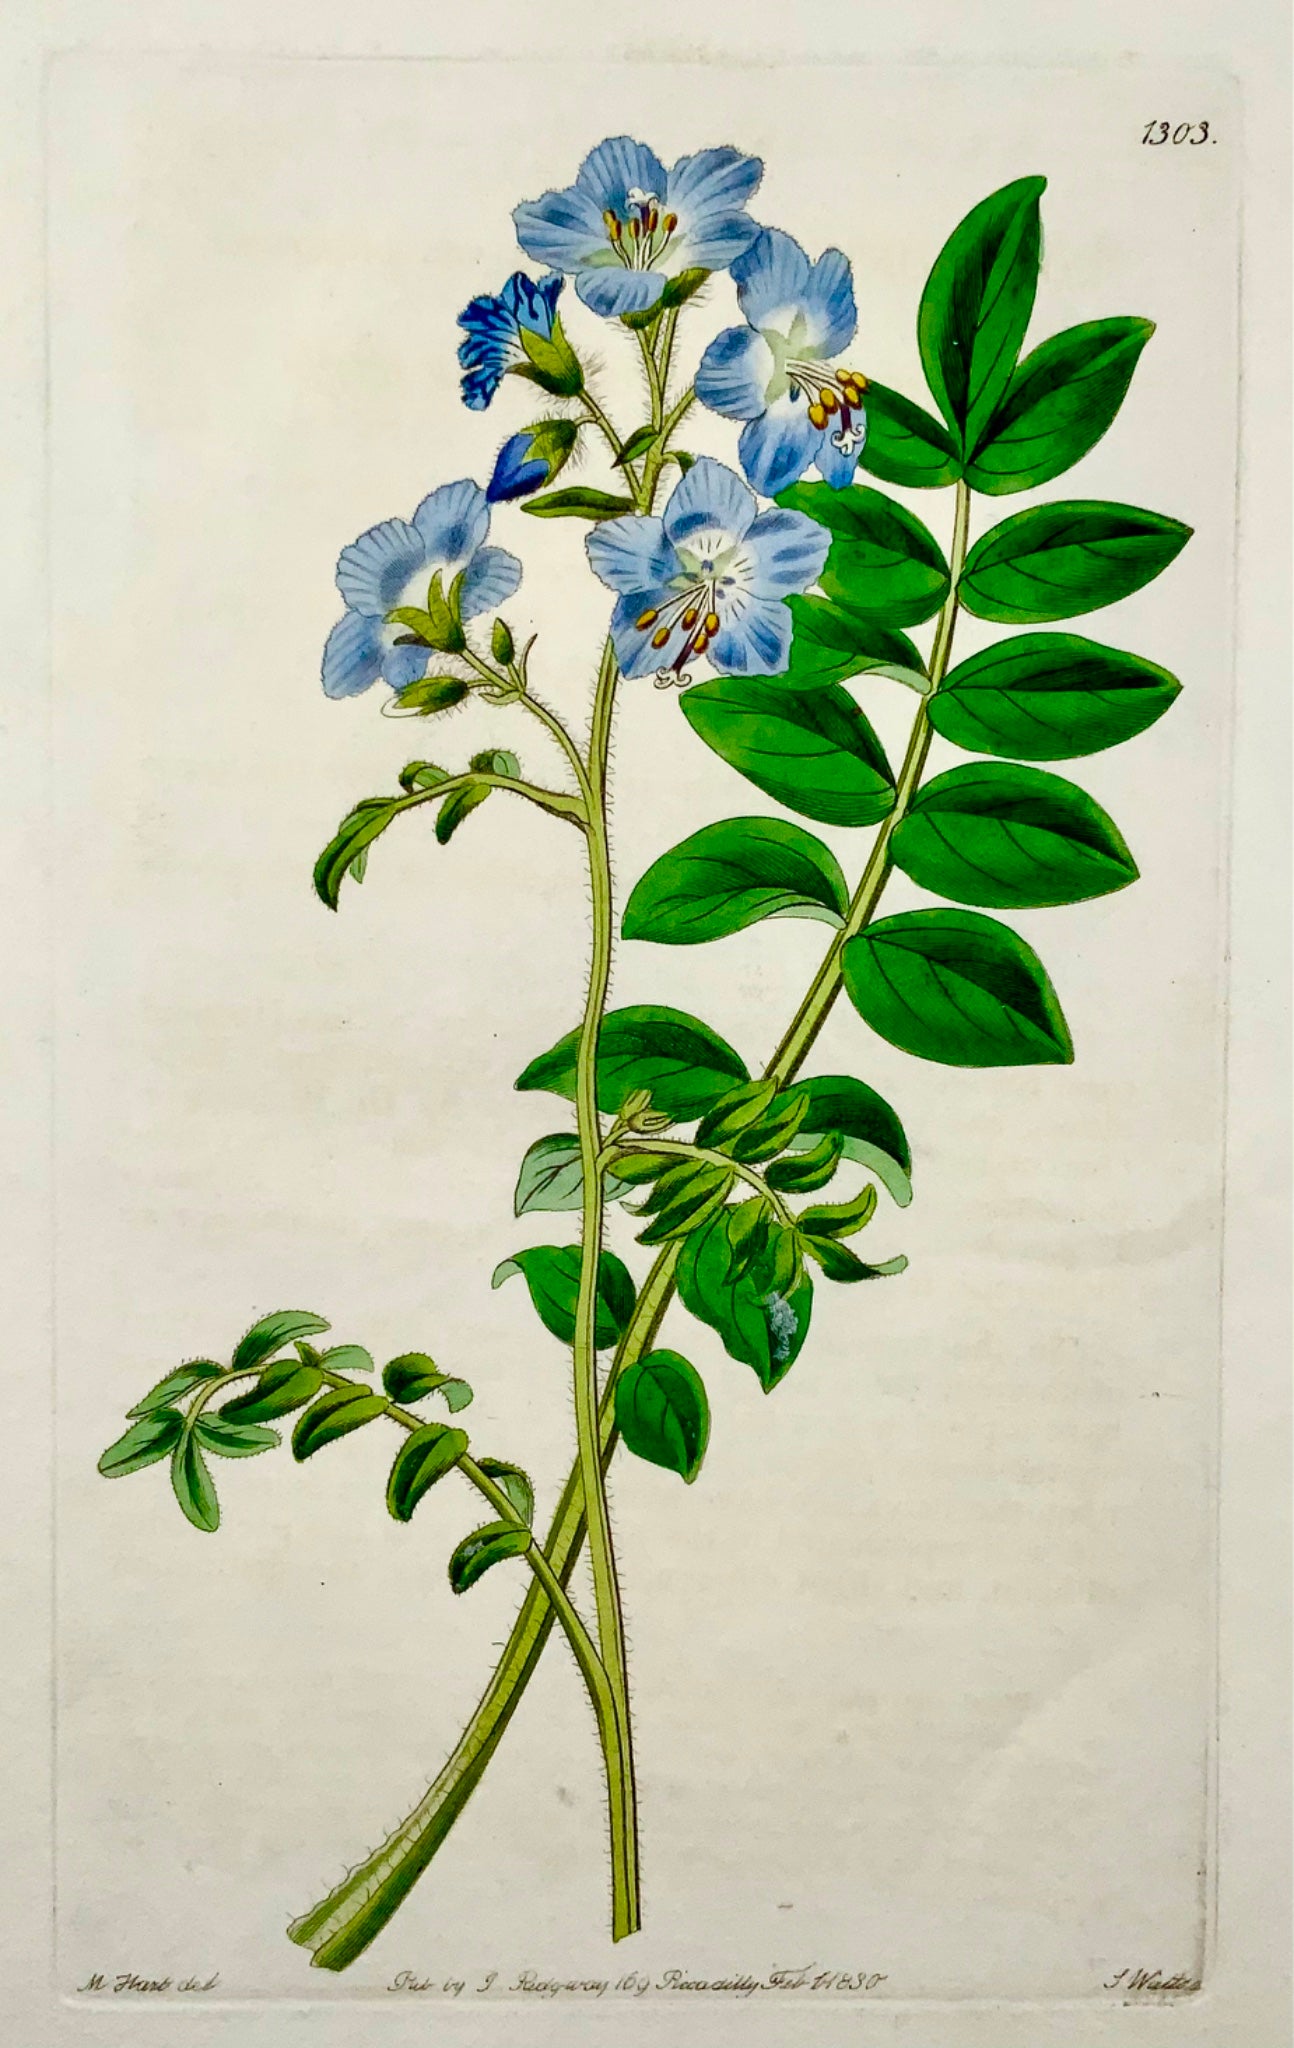 1830 Scala di Giacobbe, Watts, incisione su rame, bel colore originale a mano, botanica